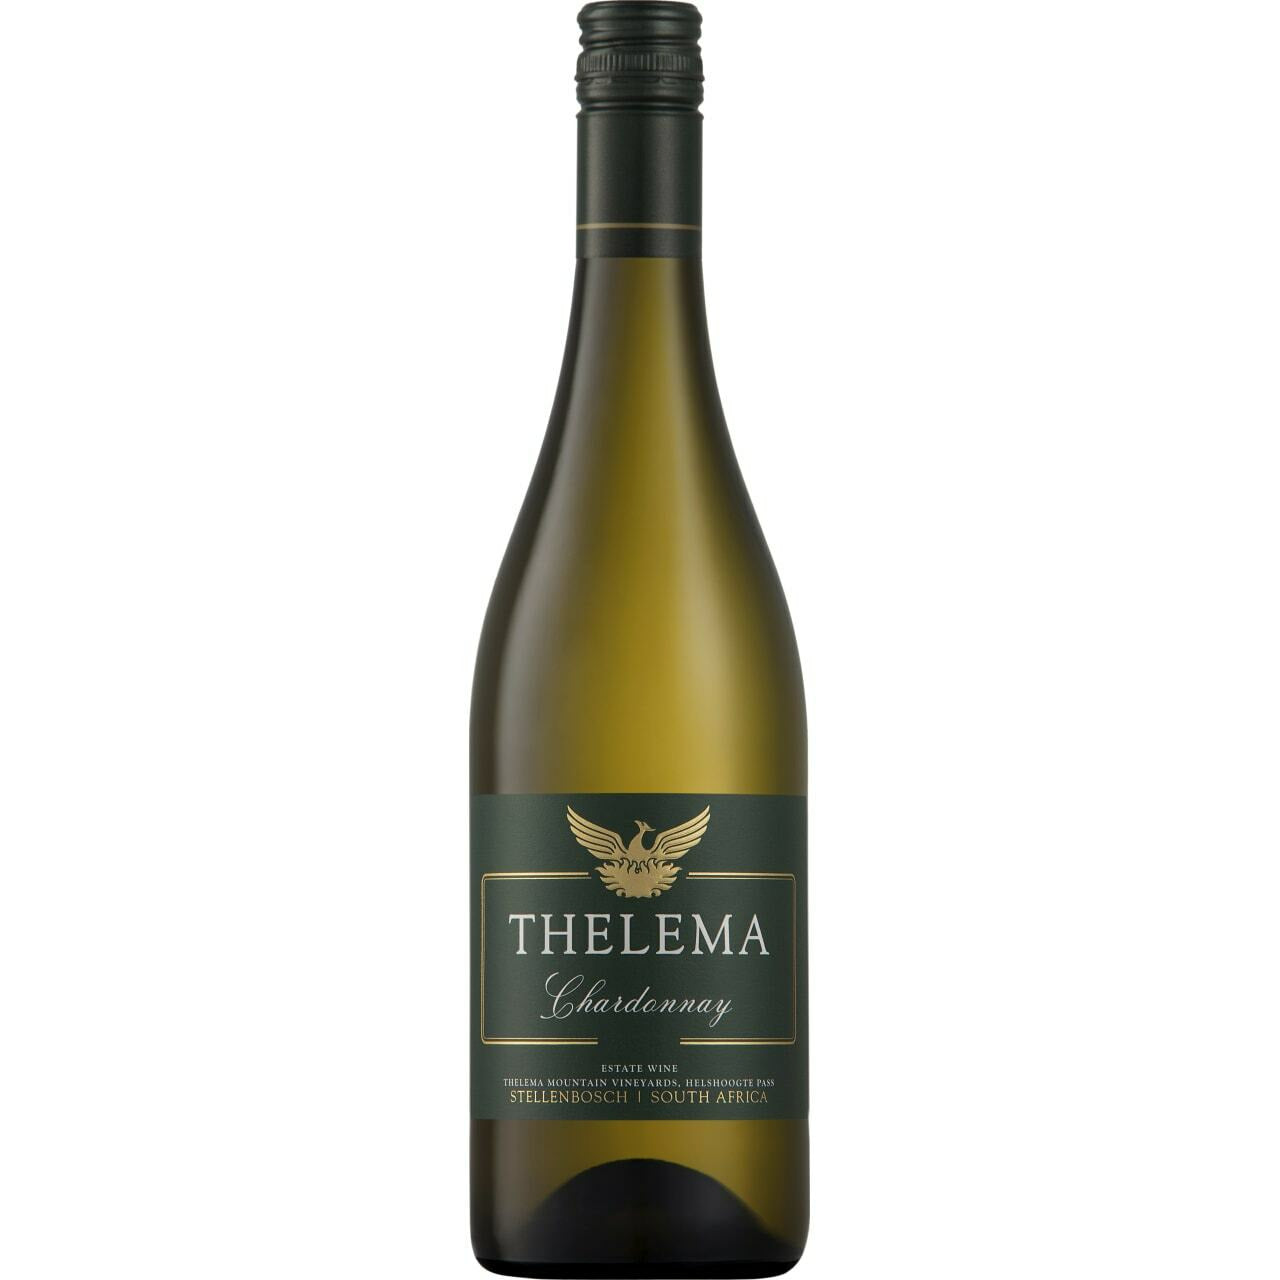 Thelema Chardonnay 2019